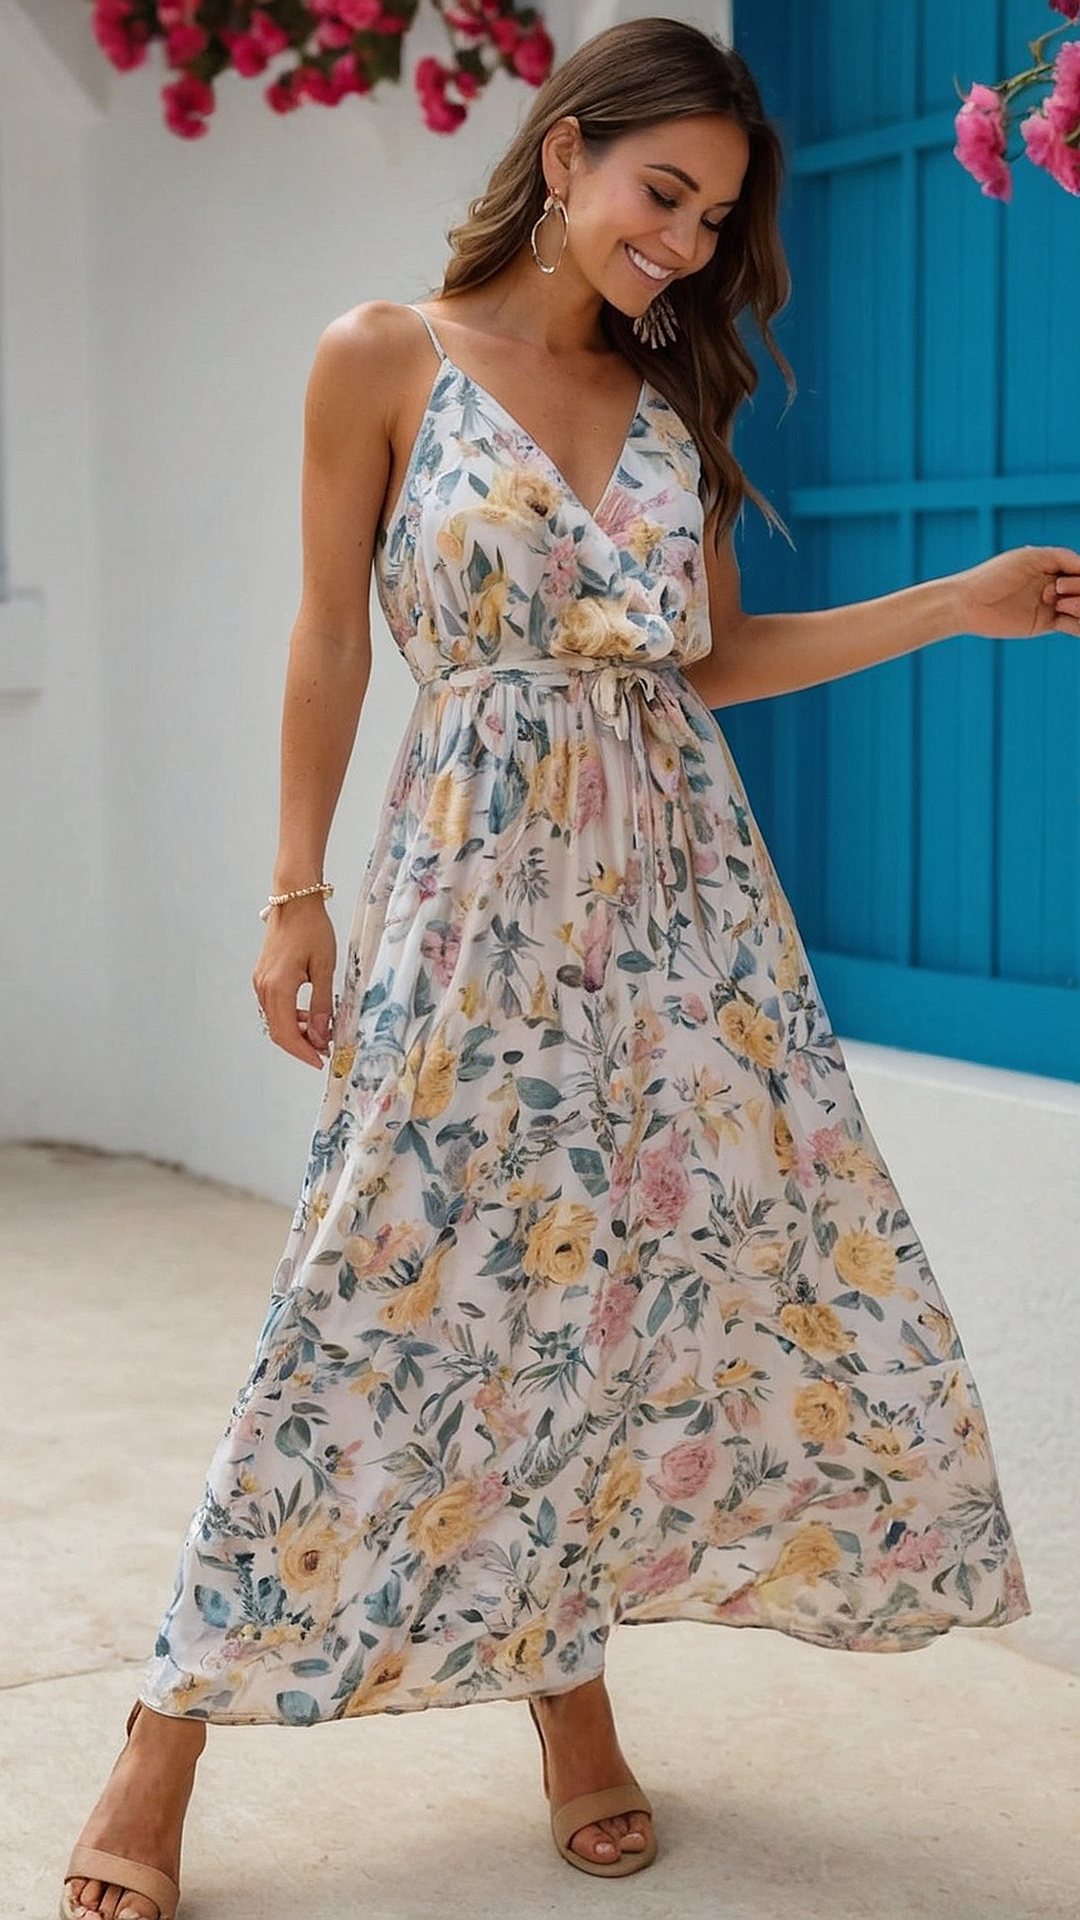 Springtime Splendor: Floral Maxi Dress Lookbook